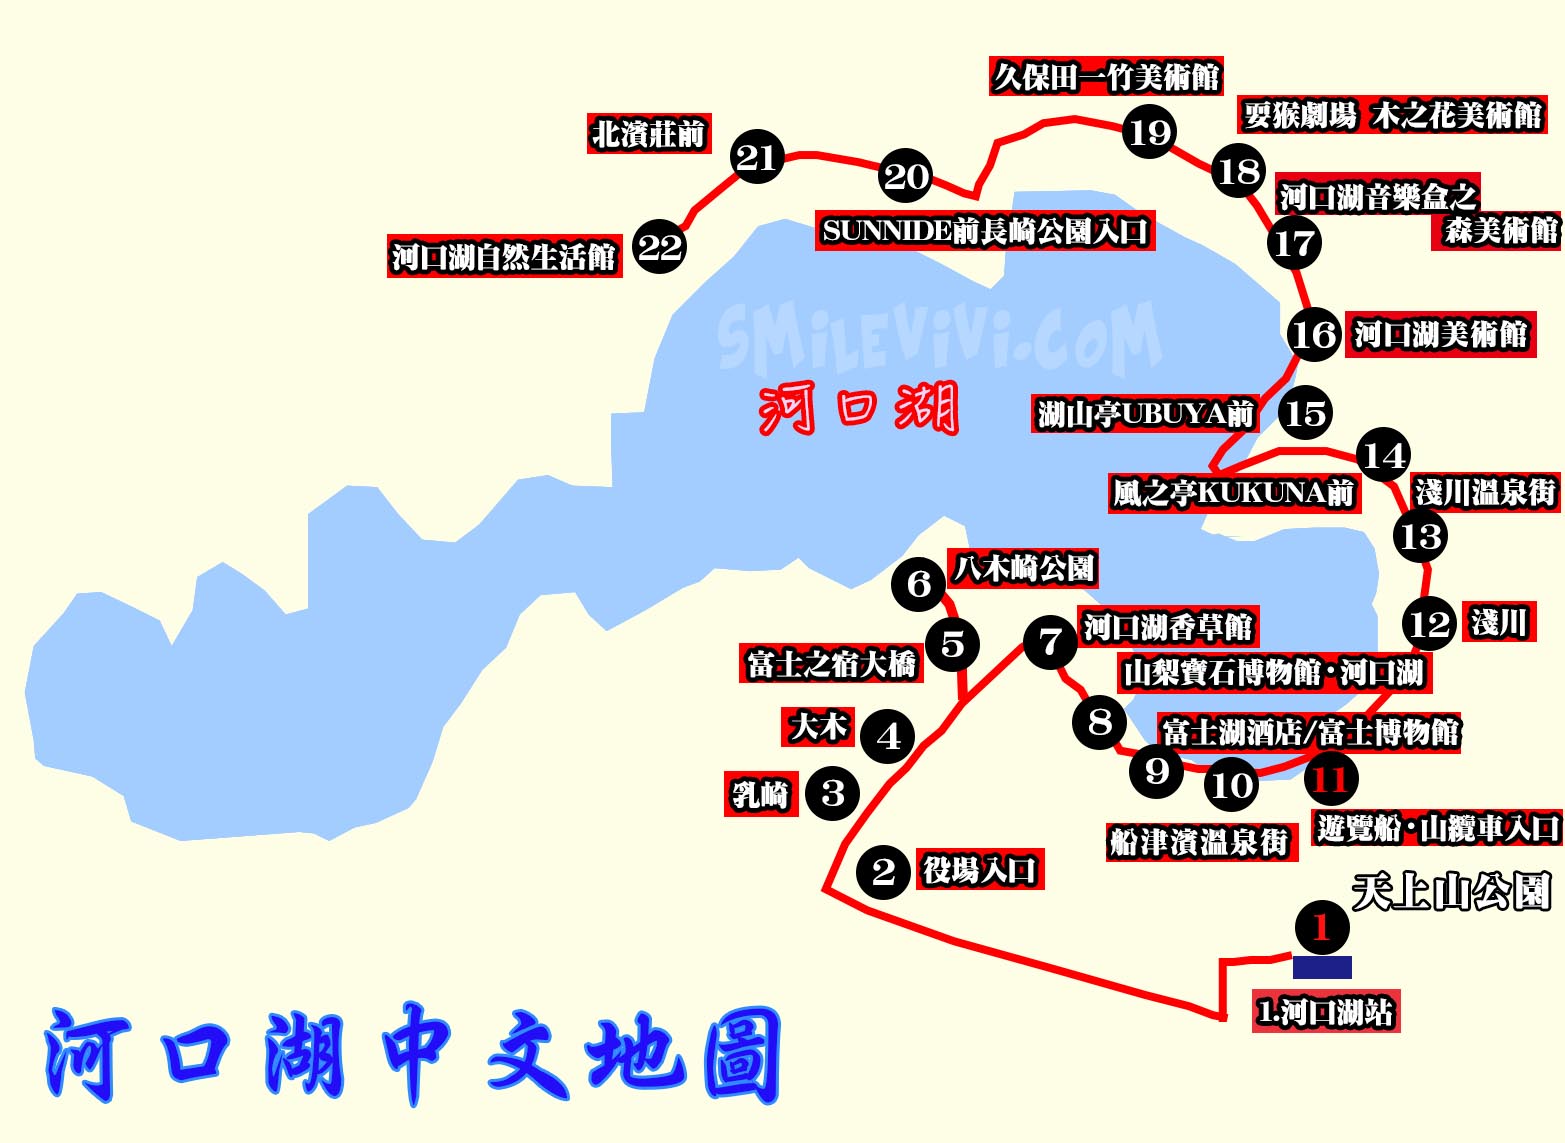 東京∥河口湖天上山公園卡奇卡奇山纜車(Kachi Kachi;カチカチ山ロープウェイ)、FUJIYAMA COOKIE富士山餅乾 2 %E6%B2%B3%E5%8F%A3%E6%B9%96%E9%81%8A%E8%A6%BD%E8%88%B9